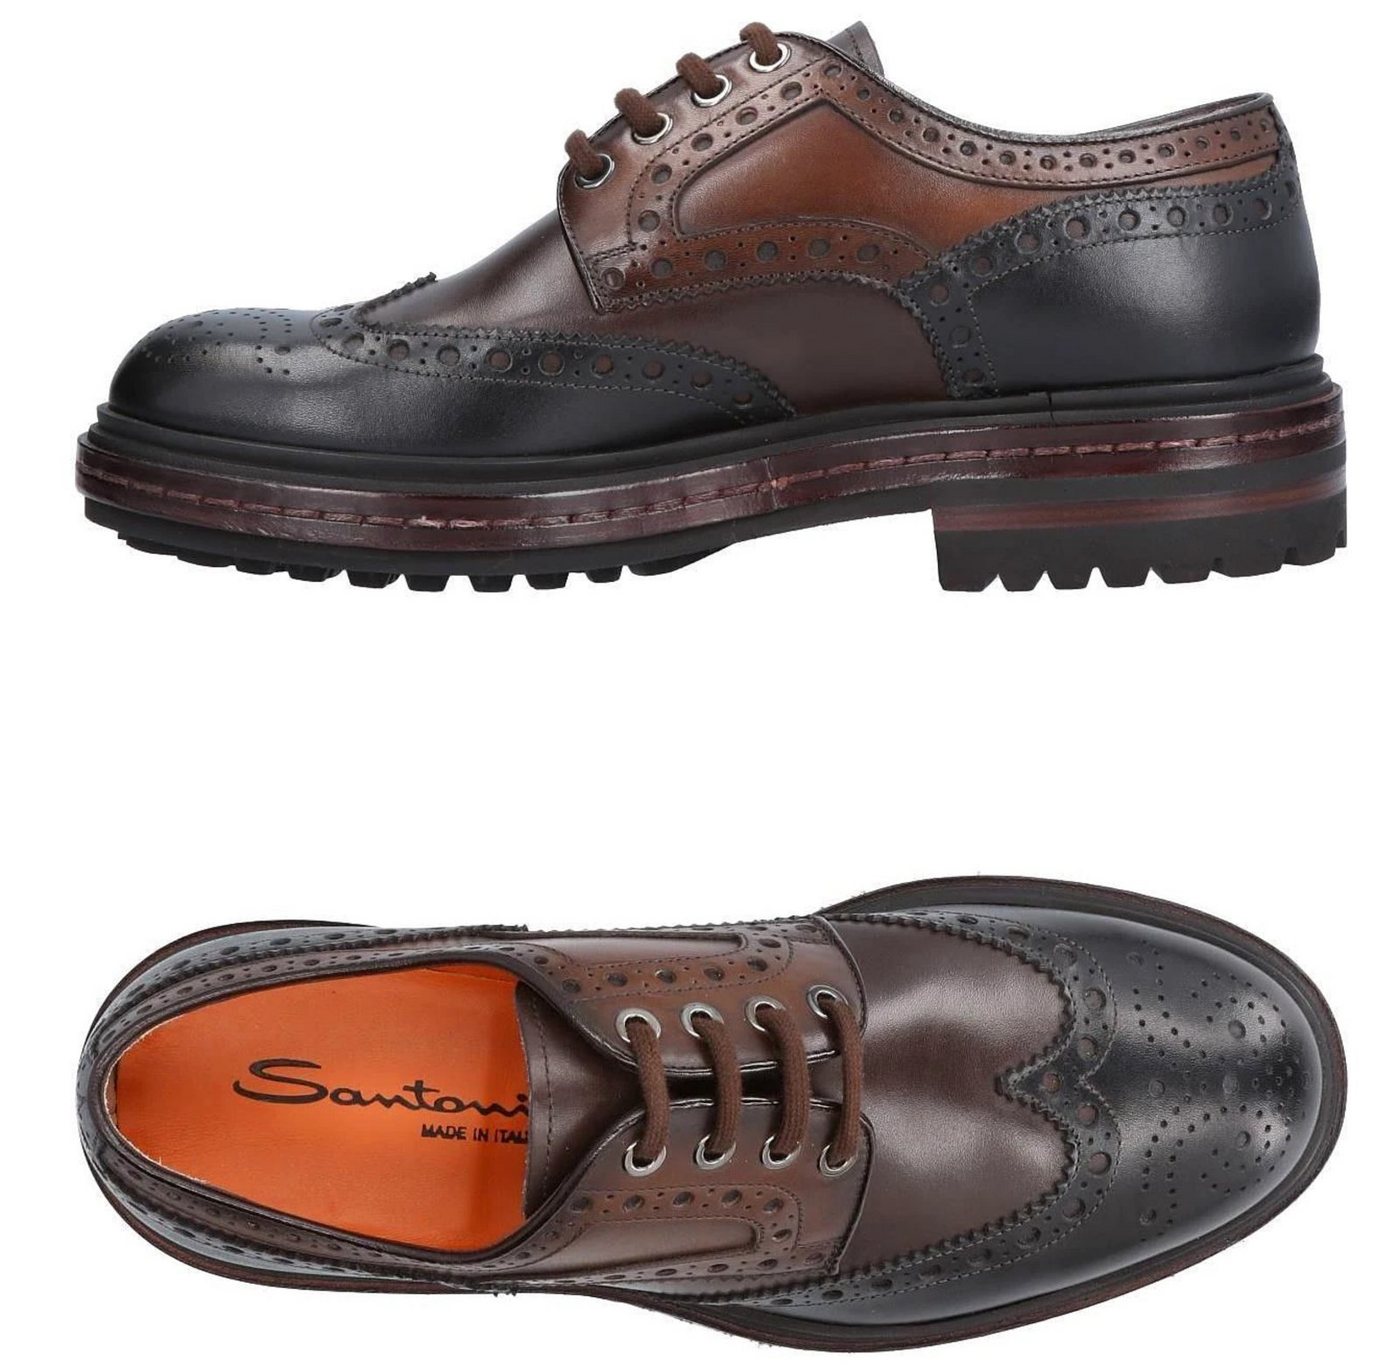 SANTONI Santoni Leder Schnürschuhe Lace-Up Shoes Boots Mokassins Schuhe Halbsc Sneaker von SANTONI